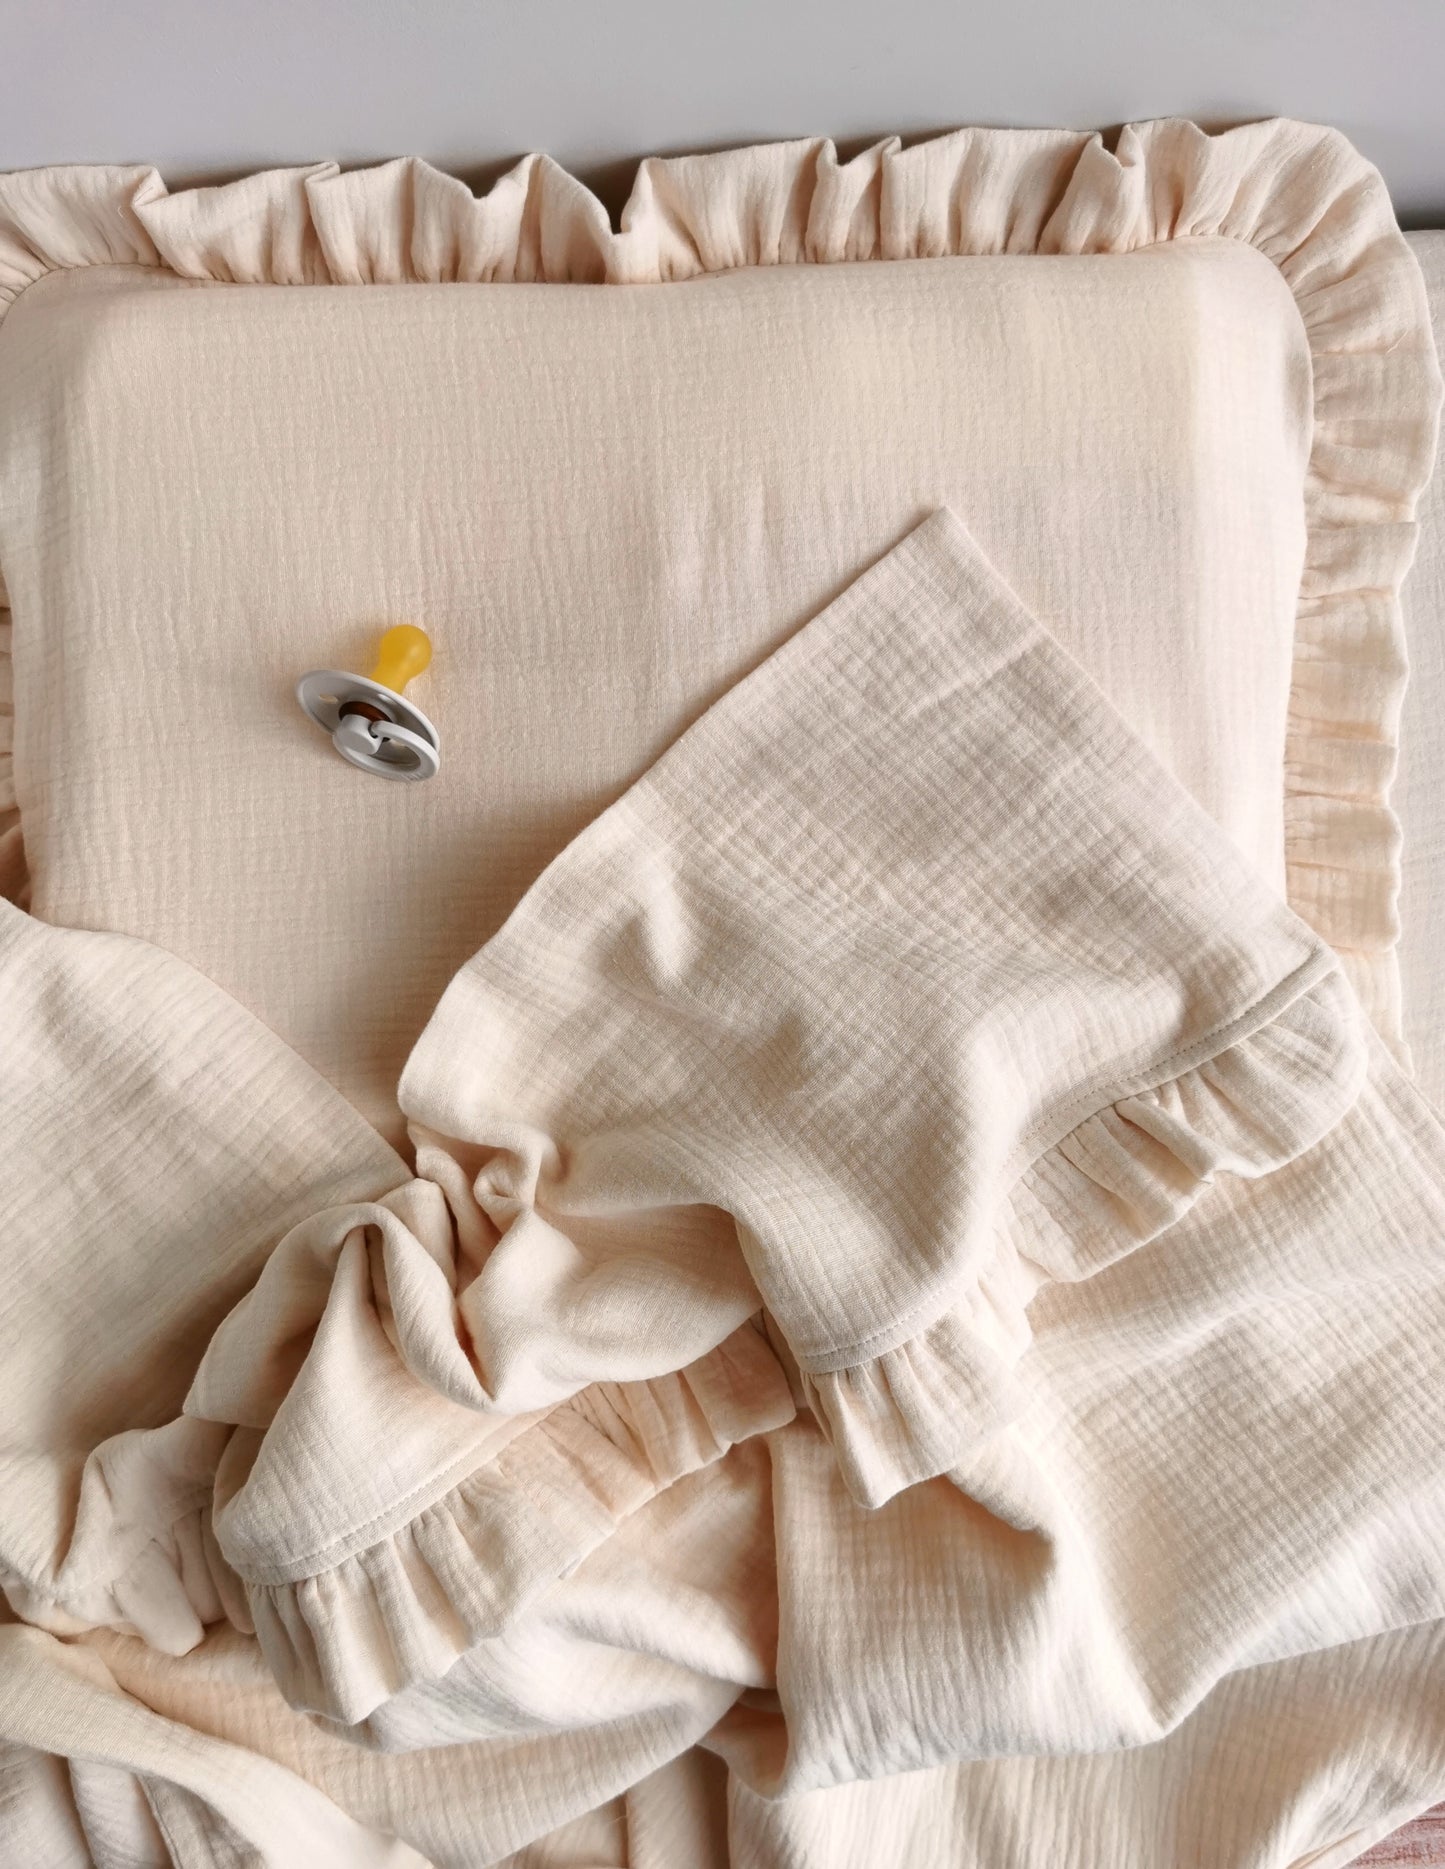 Extra Soft Muslin baby bedding set - Cream